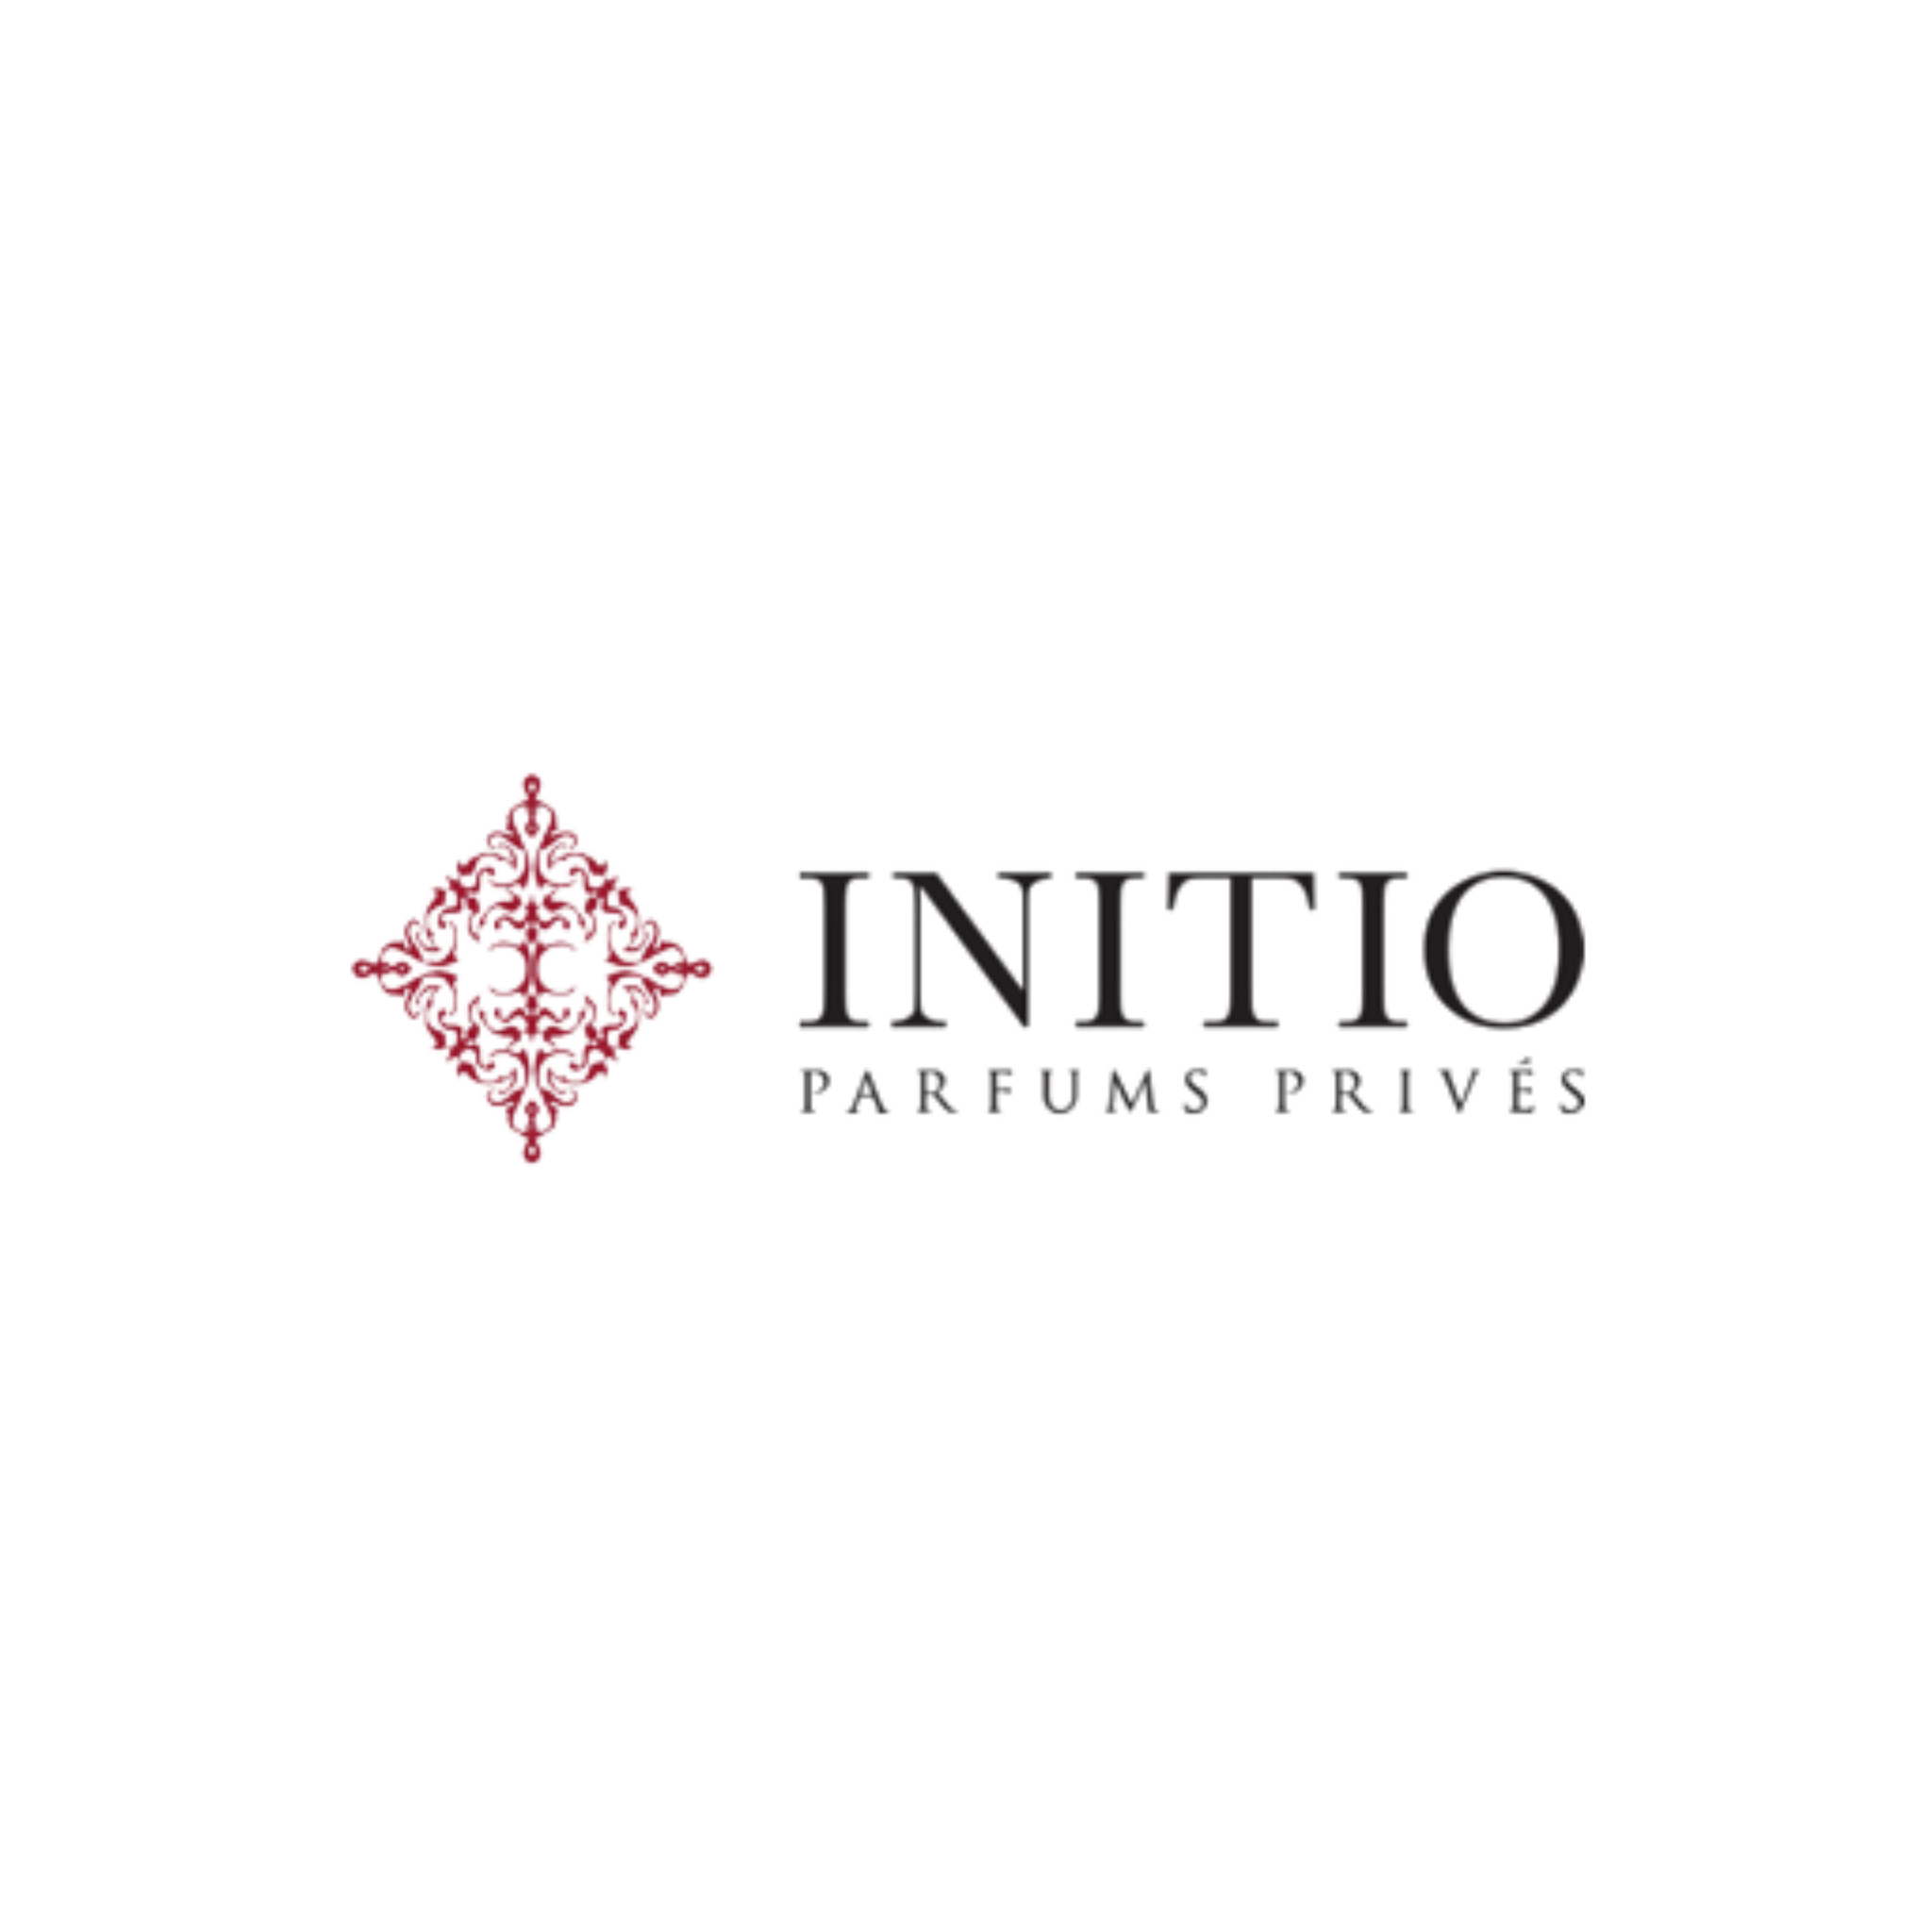 Initio addictive vibration. Инитио виды. Initio Paris brand logo. Духи Блэндс. Initio High Frequency фото.